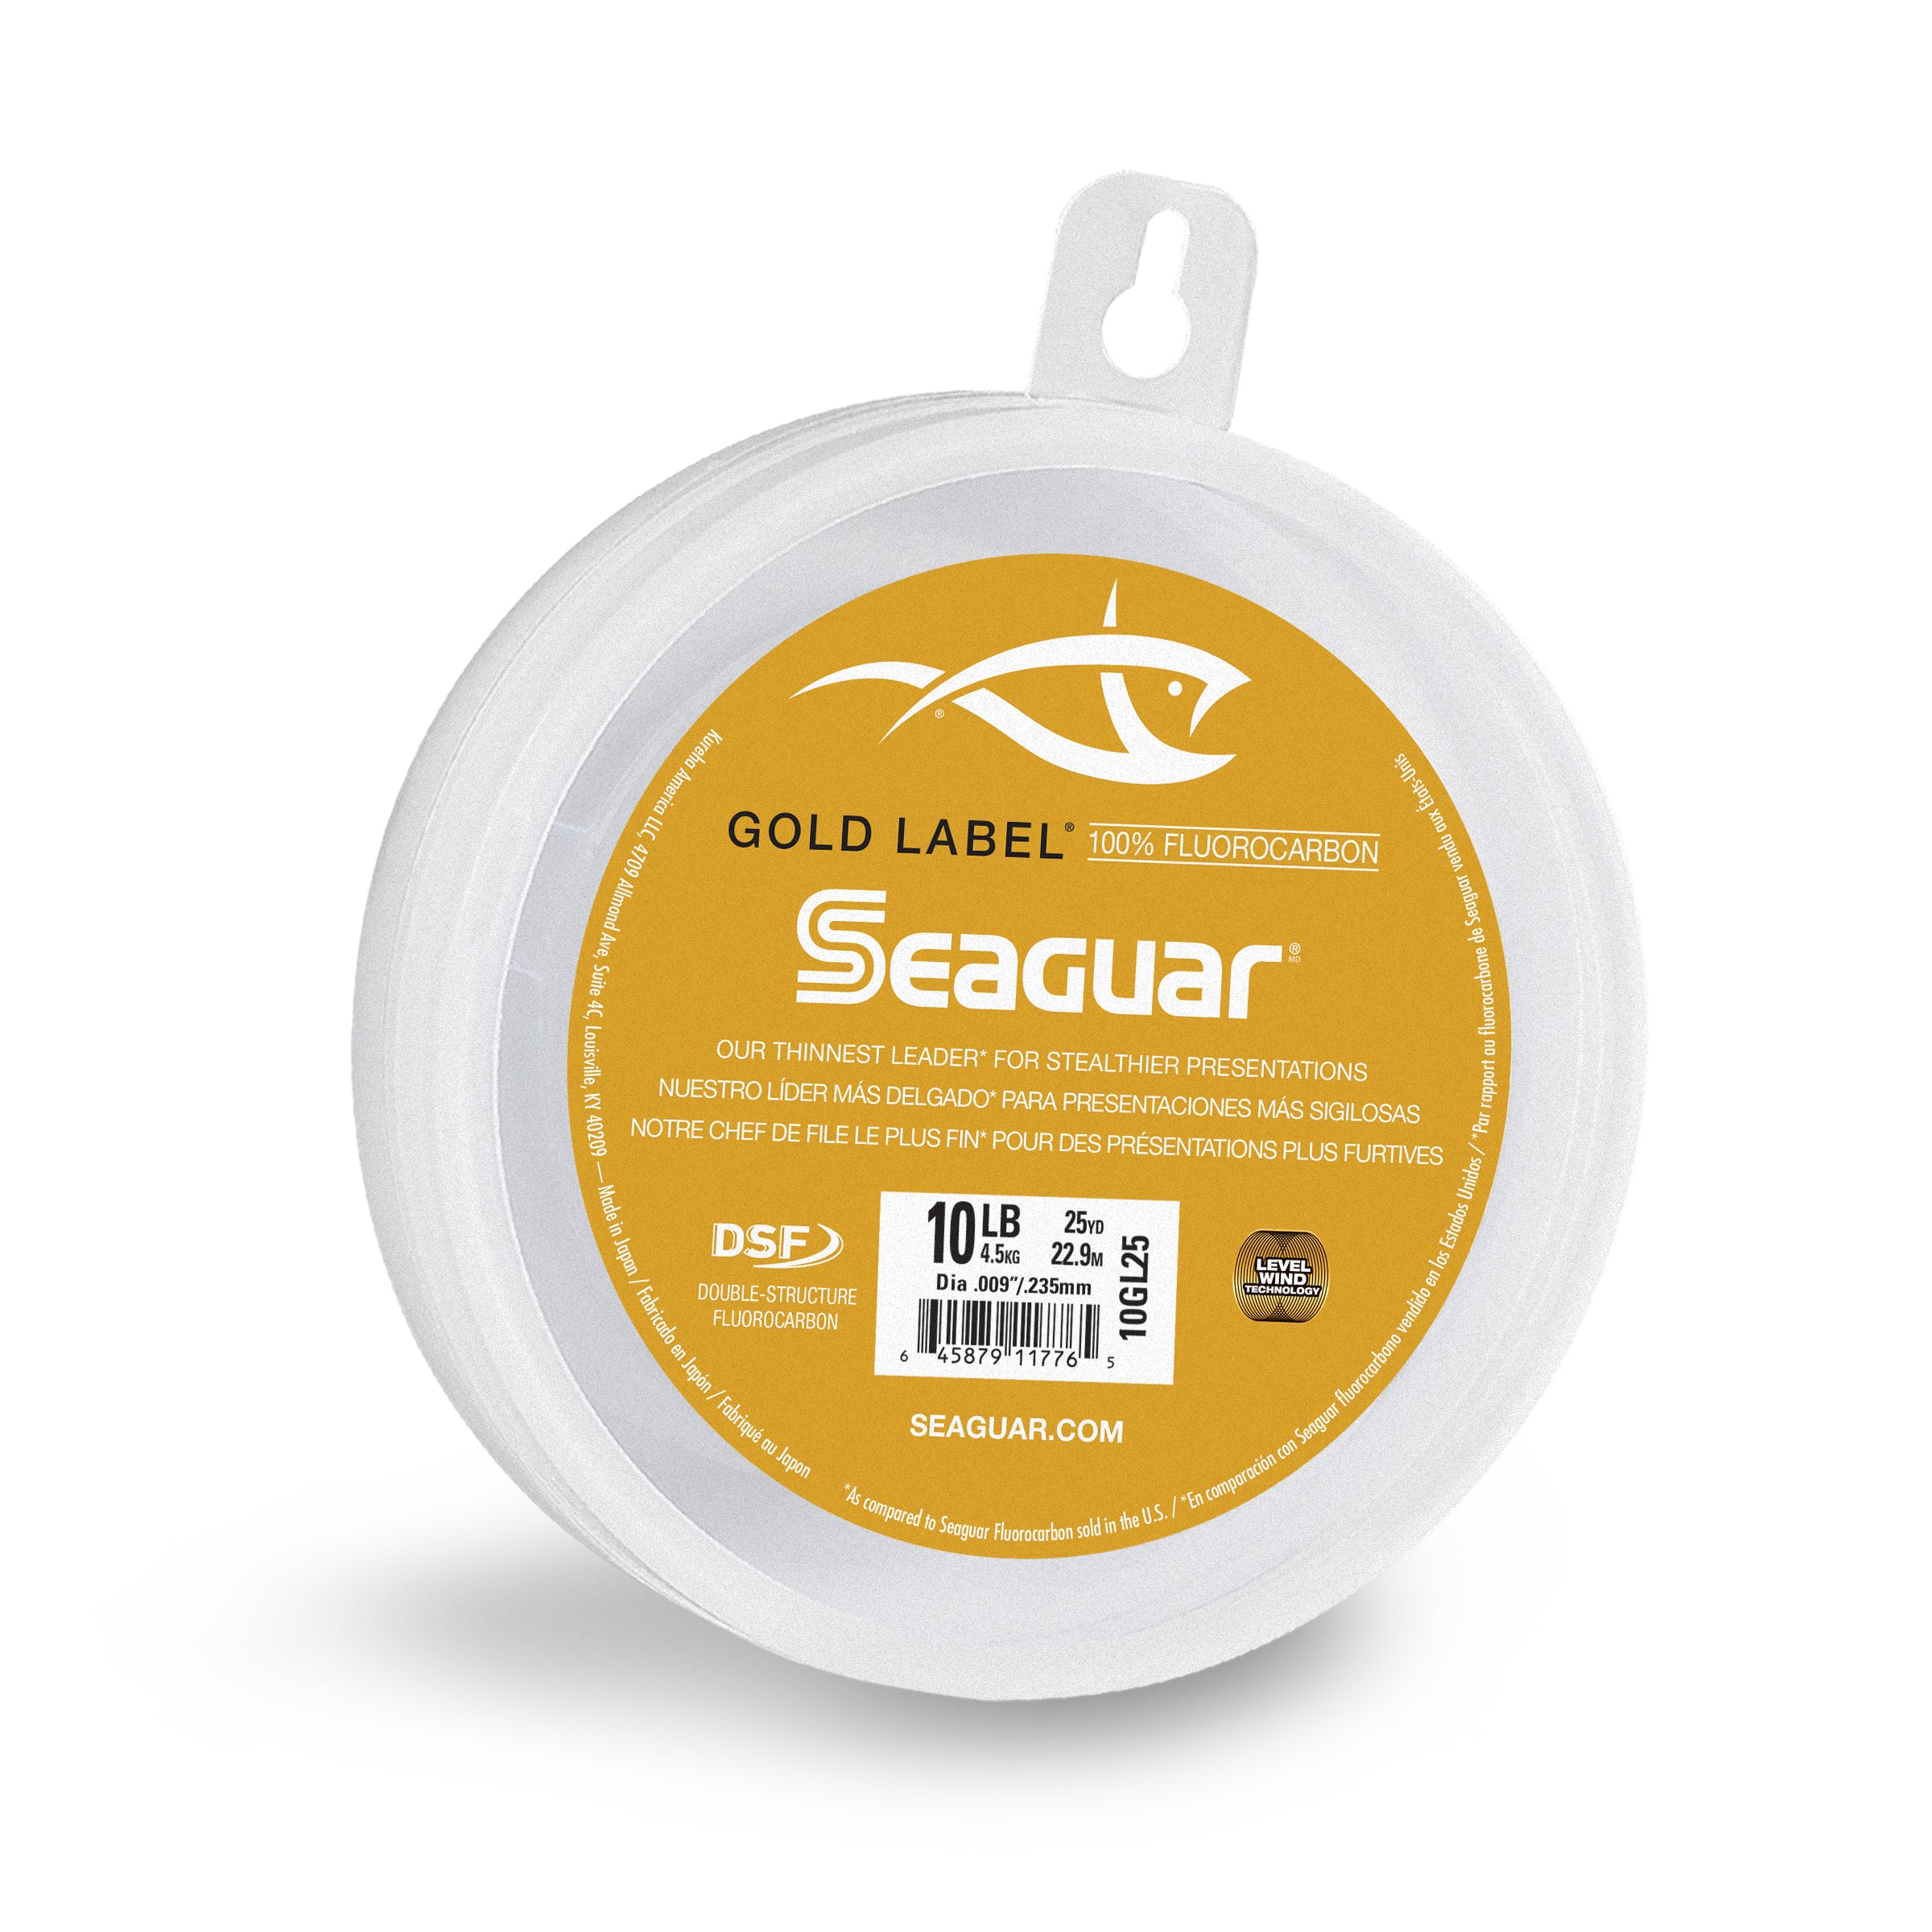 Seaguar Gold Label Fluorocarbon Leader - 10 lb.